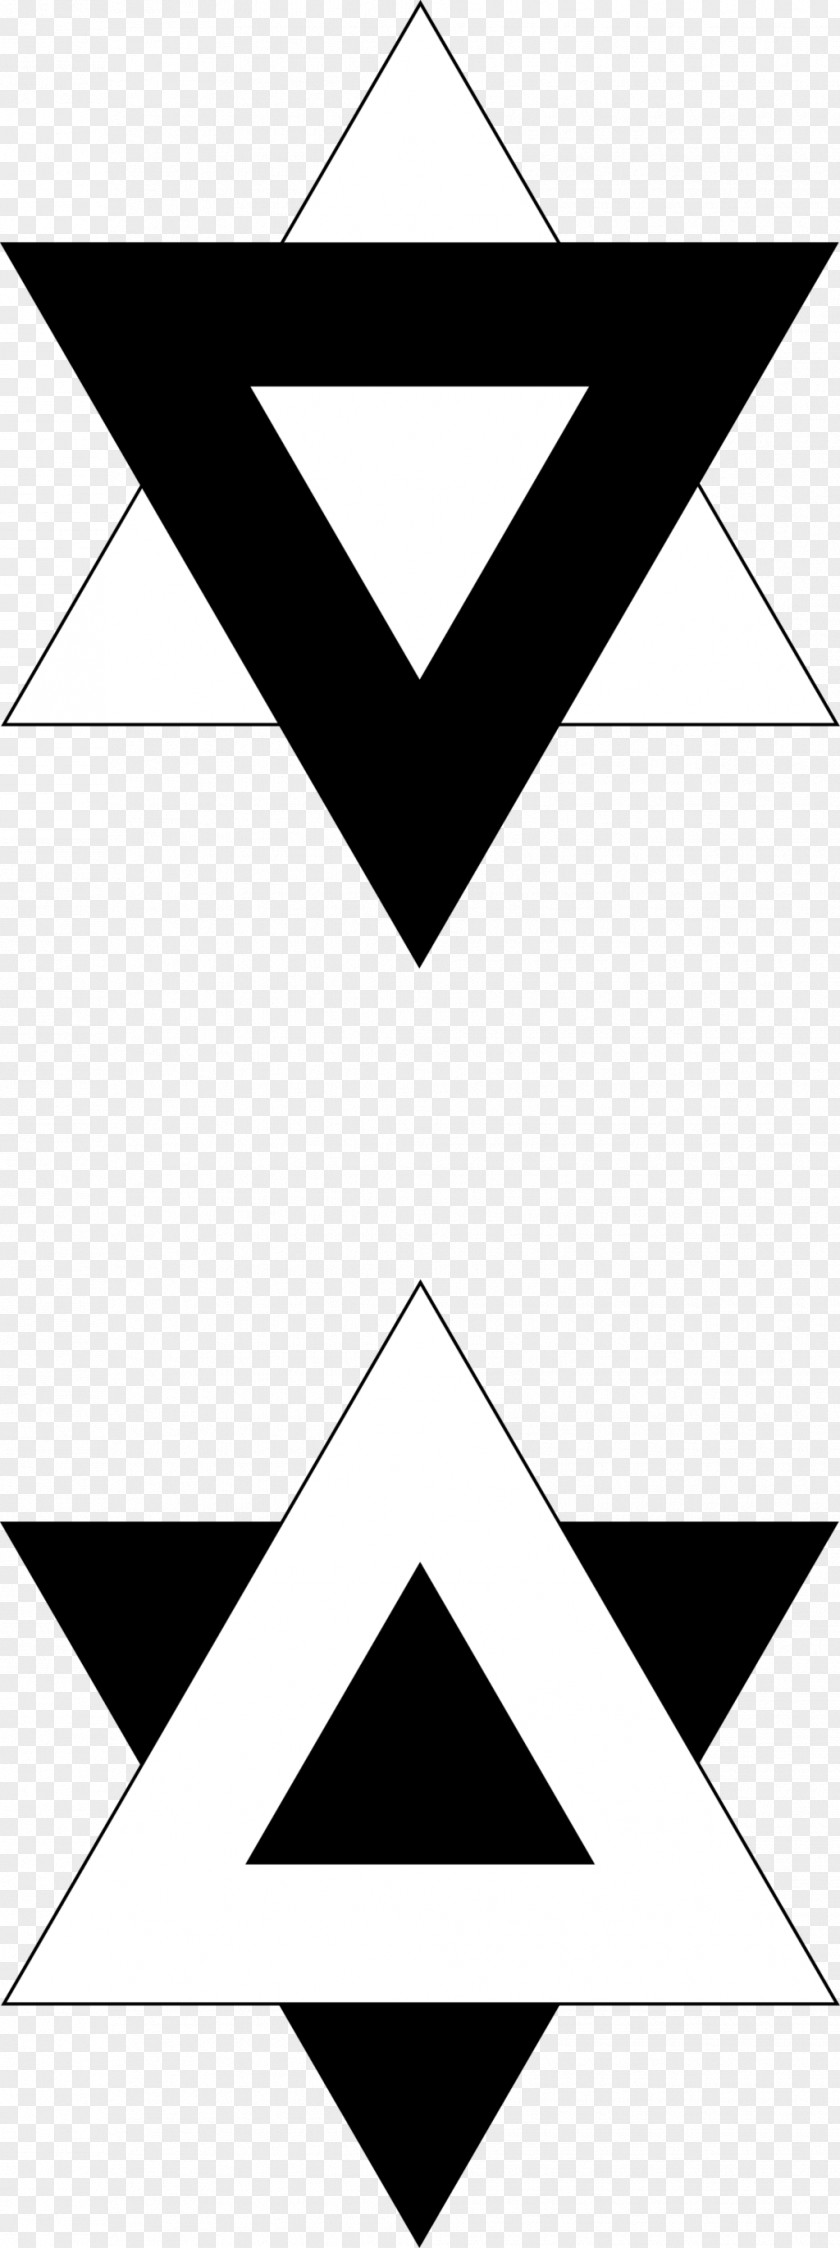 Yin Yang And Symbol Valknut Triangle I Ching PNG